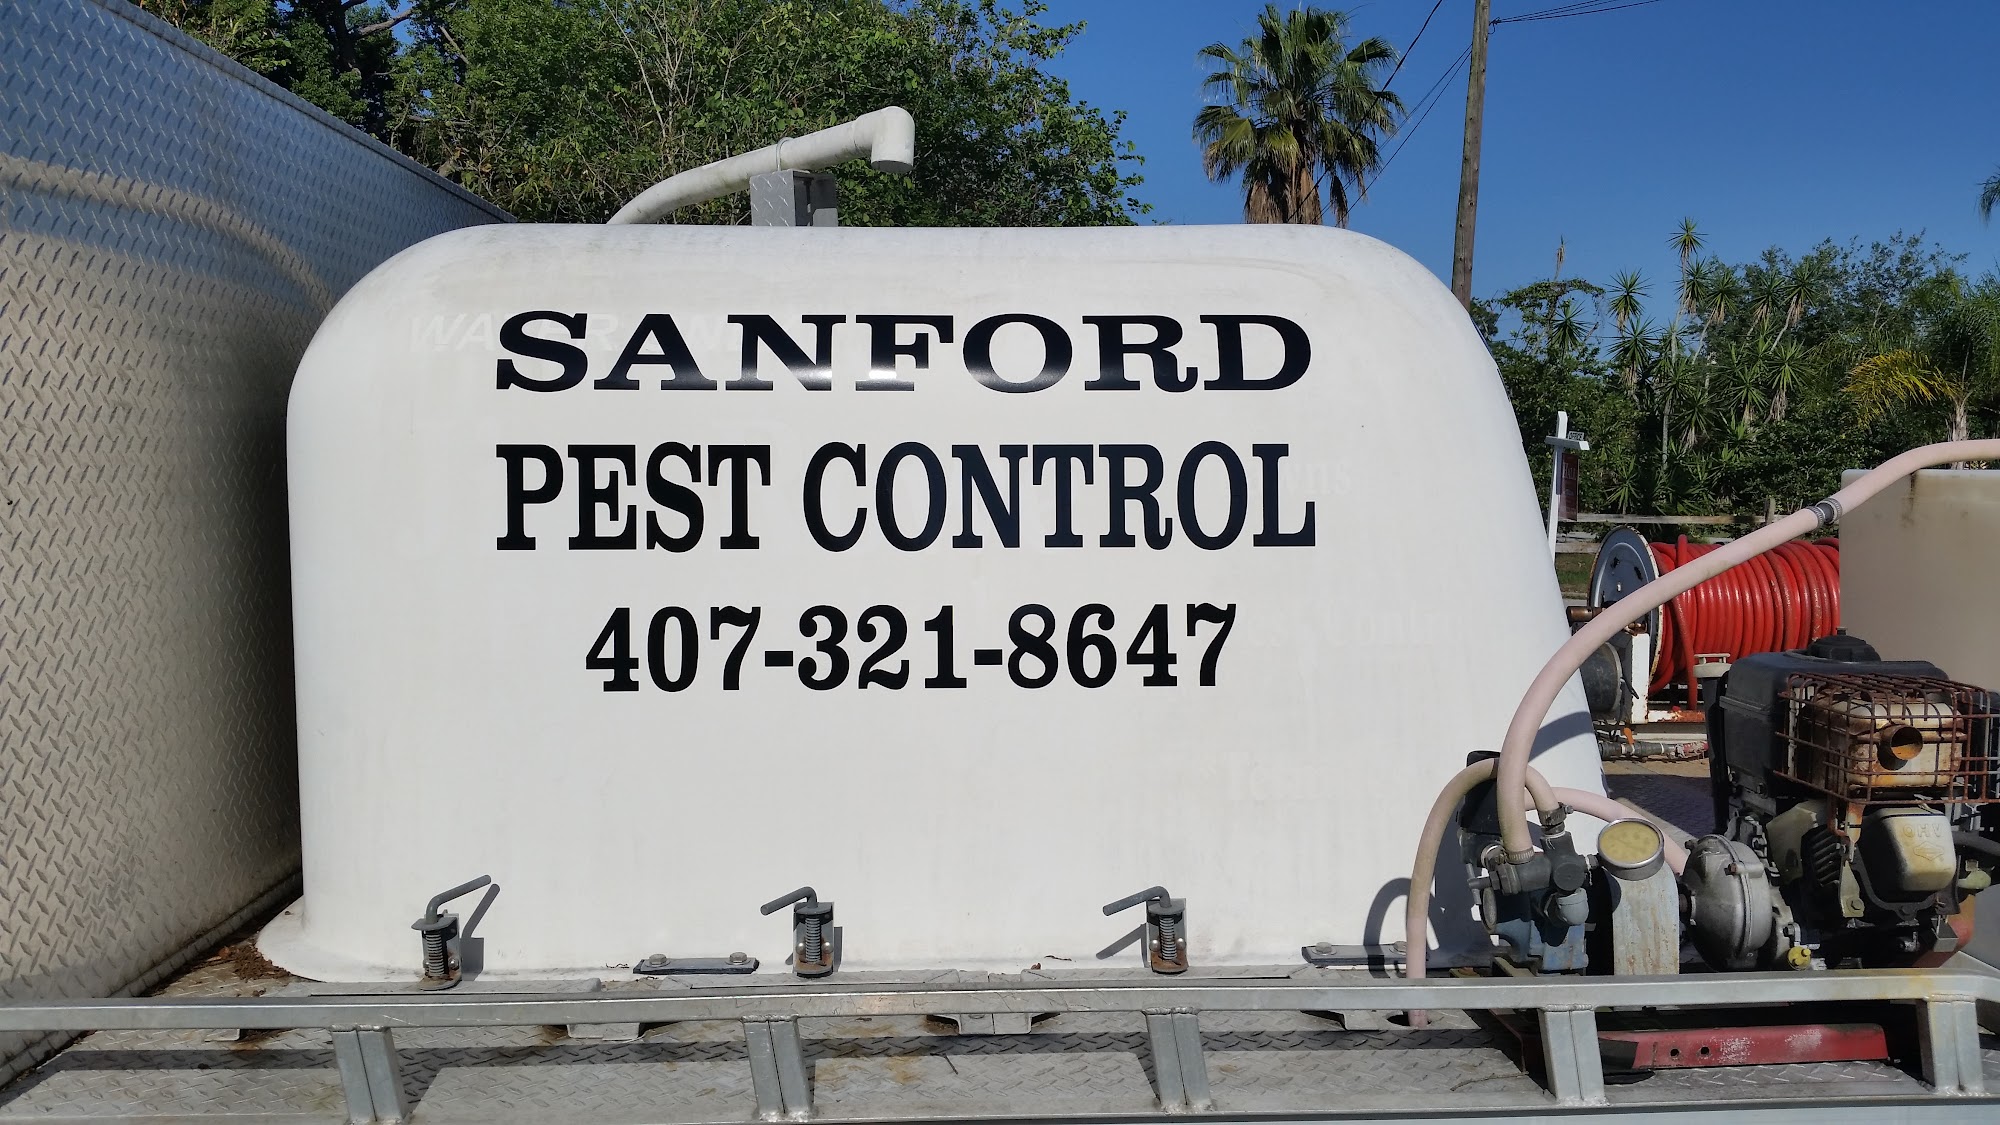 Sanford Pest Control